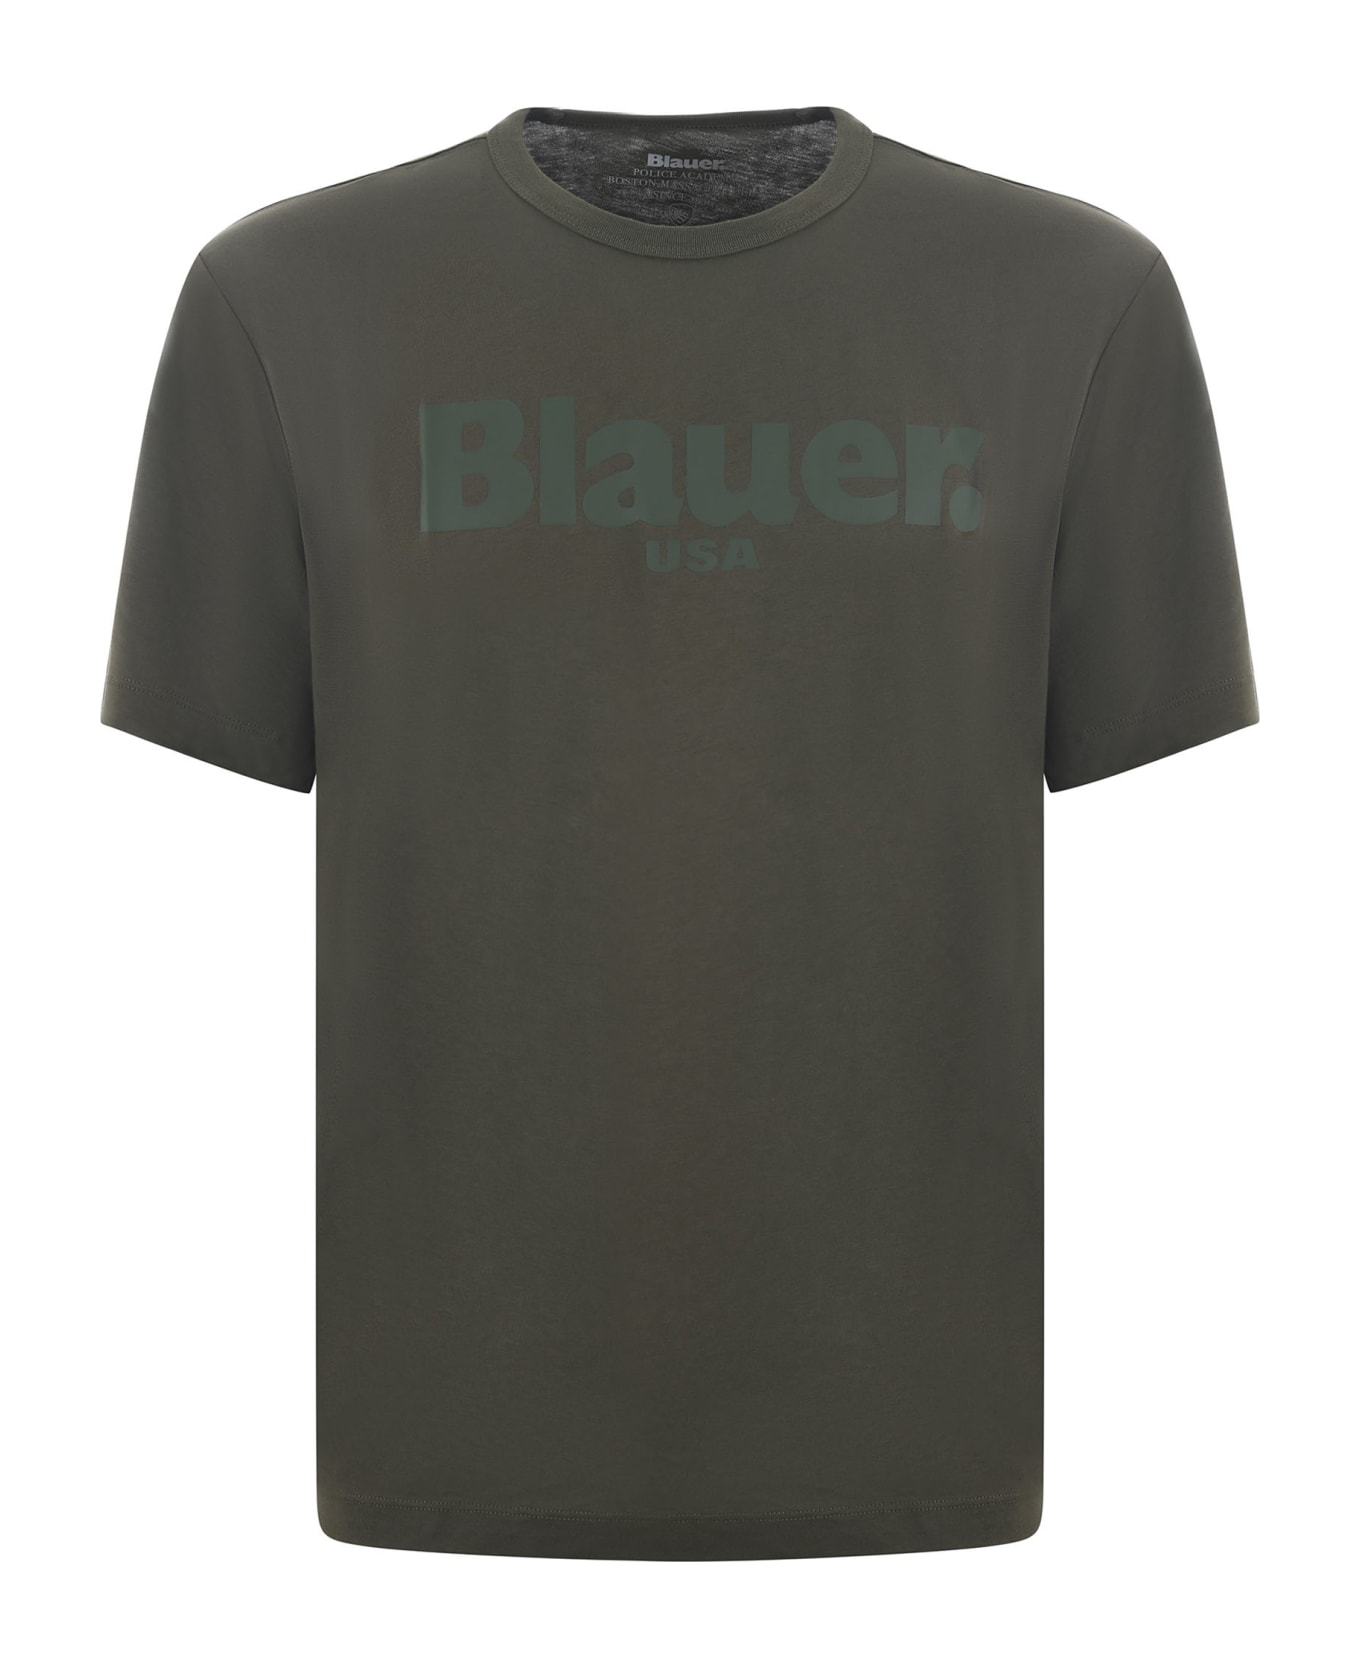 Blauer T-shirt - Verde militare シャツ